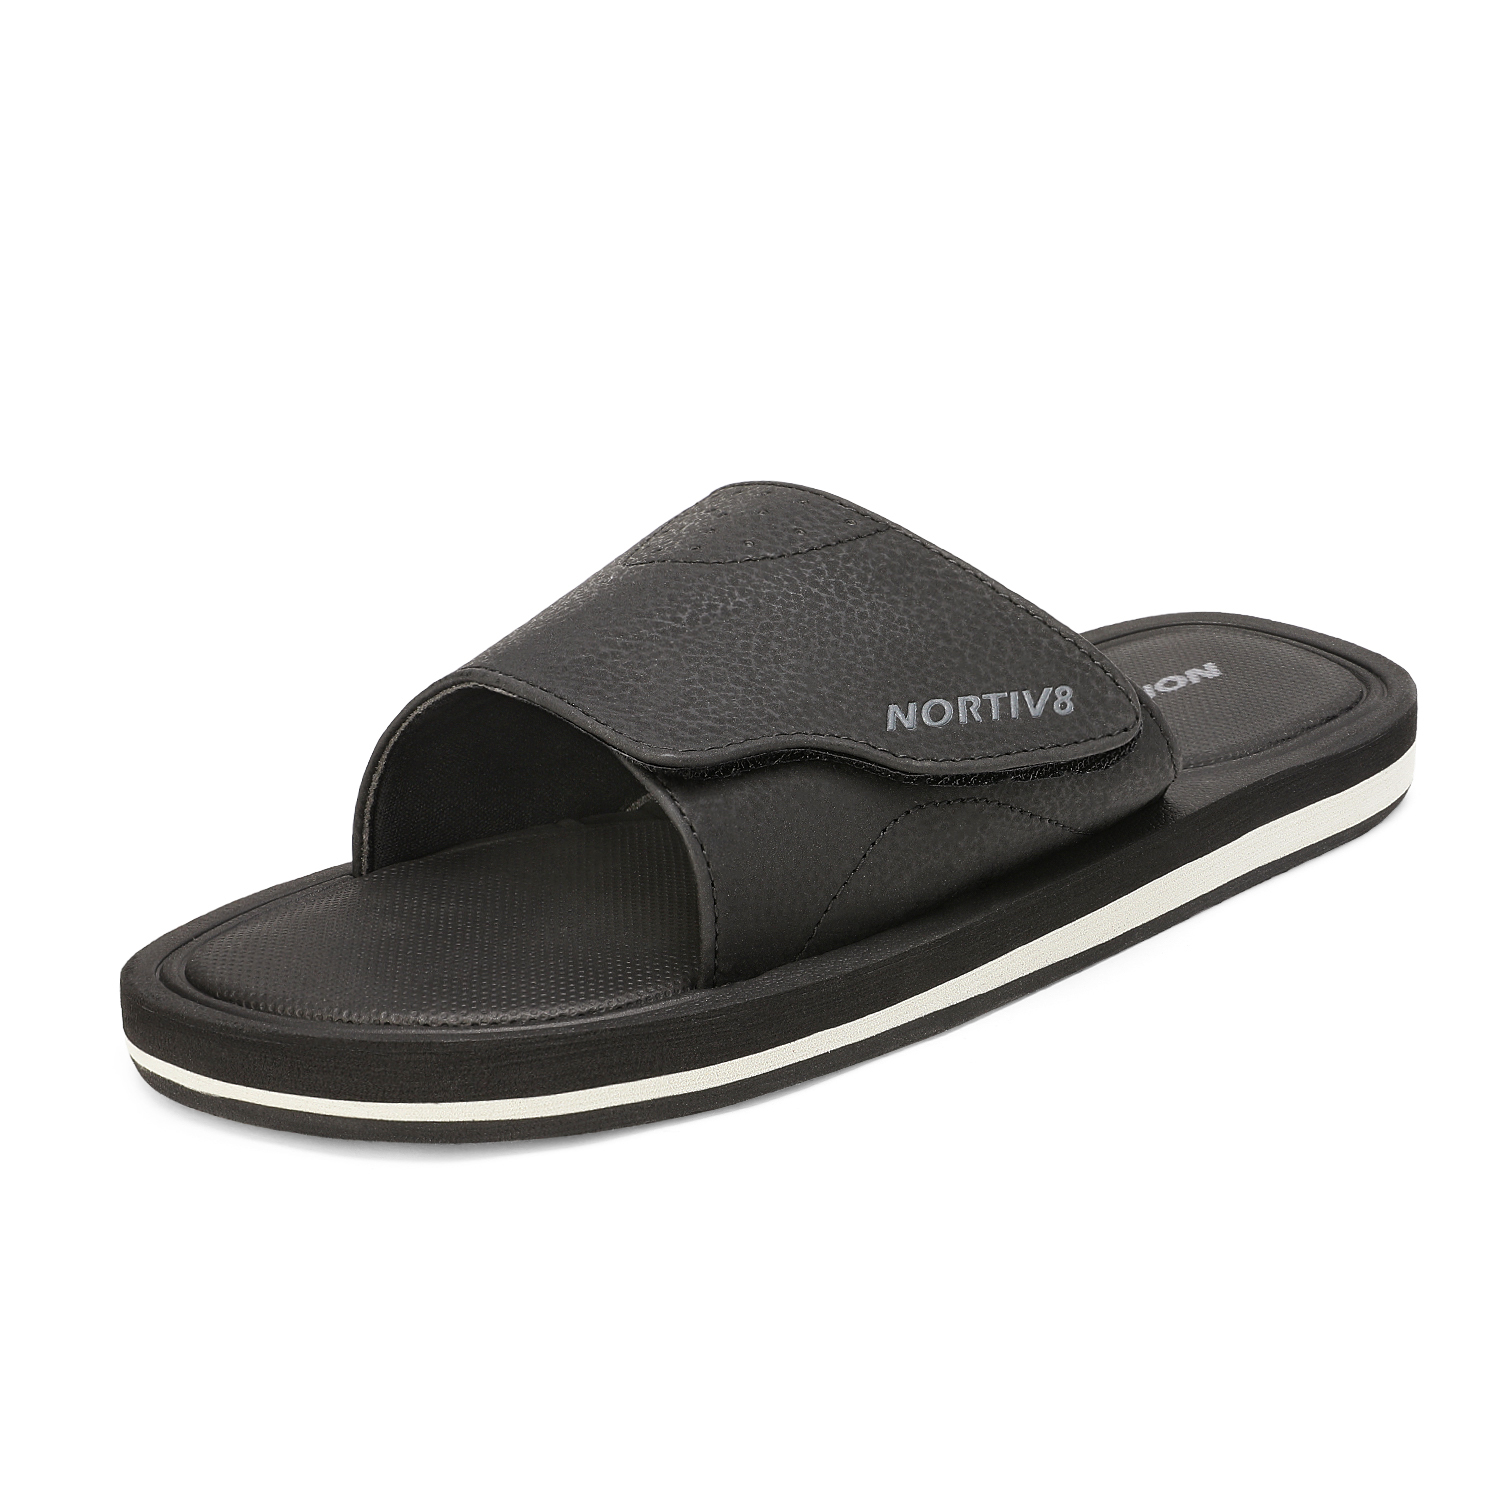 Nortiv 8 Men's Memory Foam Adjustable Slide Sandals Comfort Lightweight Beach Shoes Summer Outdoor Slipper Fusion Black Size 14 - image 1 of 5